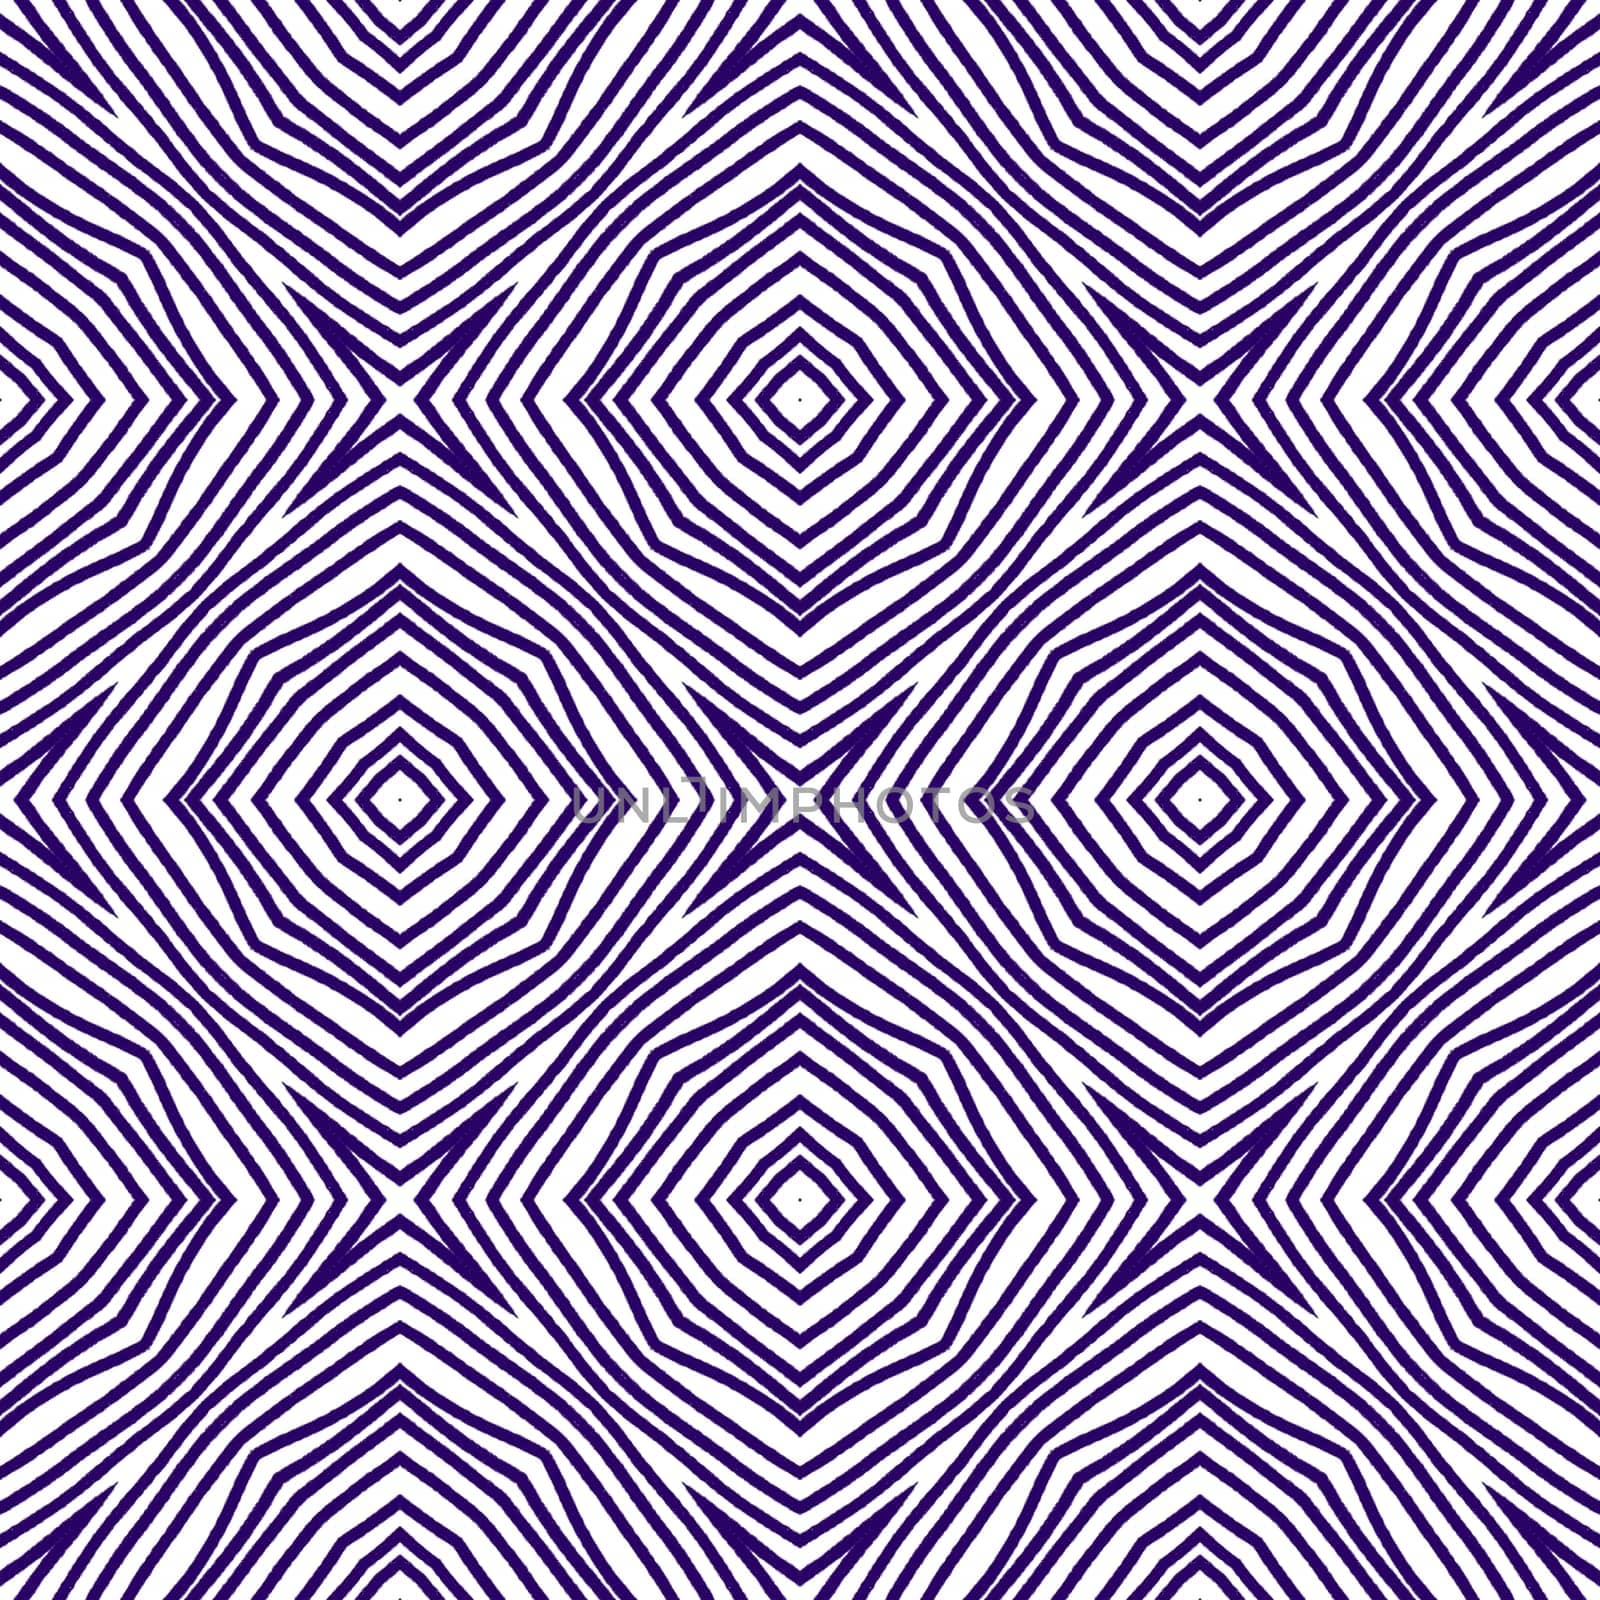 Tiled watercolor pattern. Purple symmetrical by beginagain